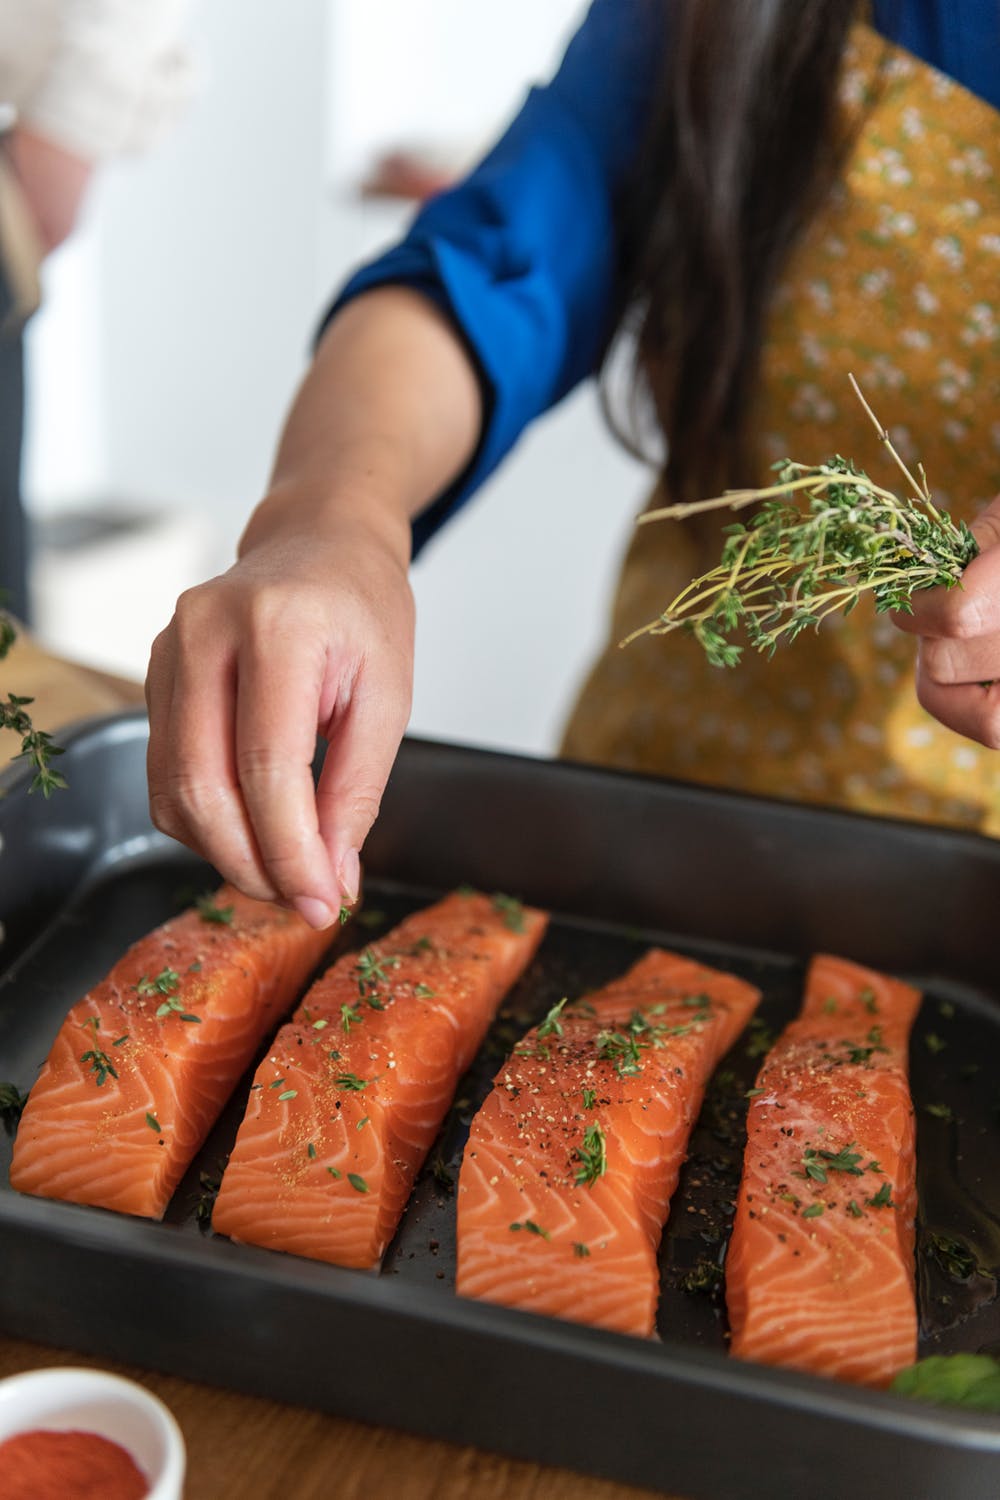 Salmon - A Nutritious Staple in a Global Food Aid Program